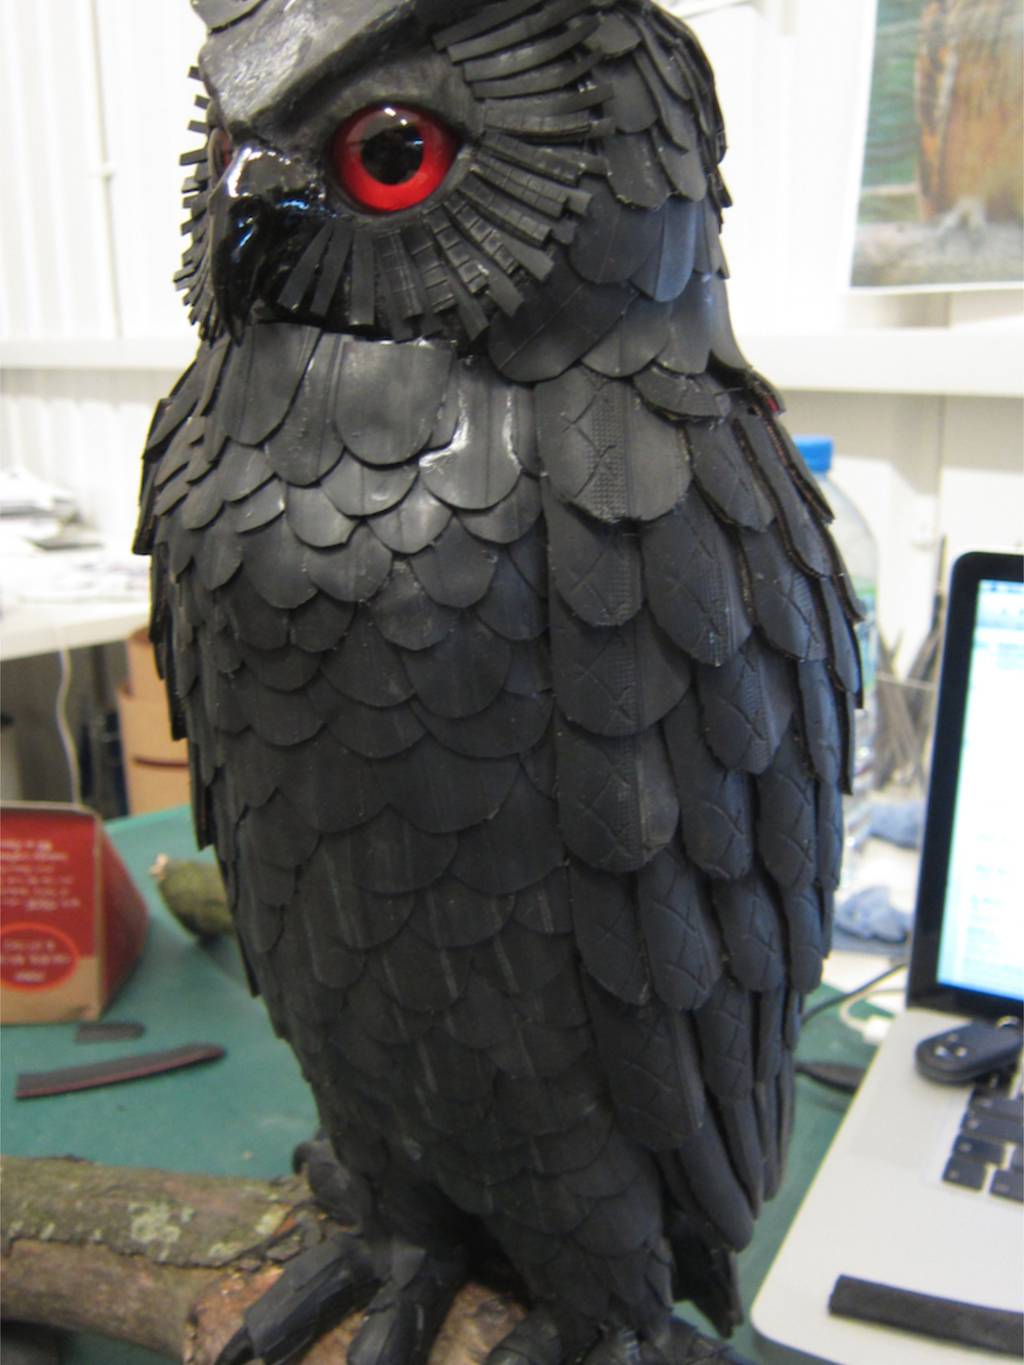 Damon Albarn - Black Owl Commission